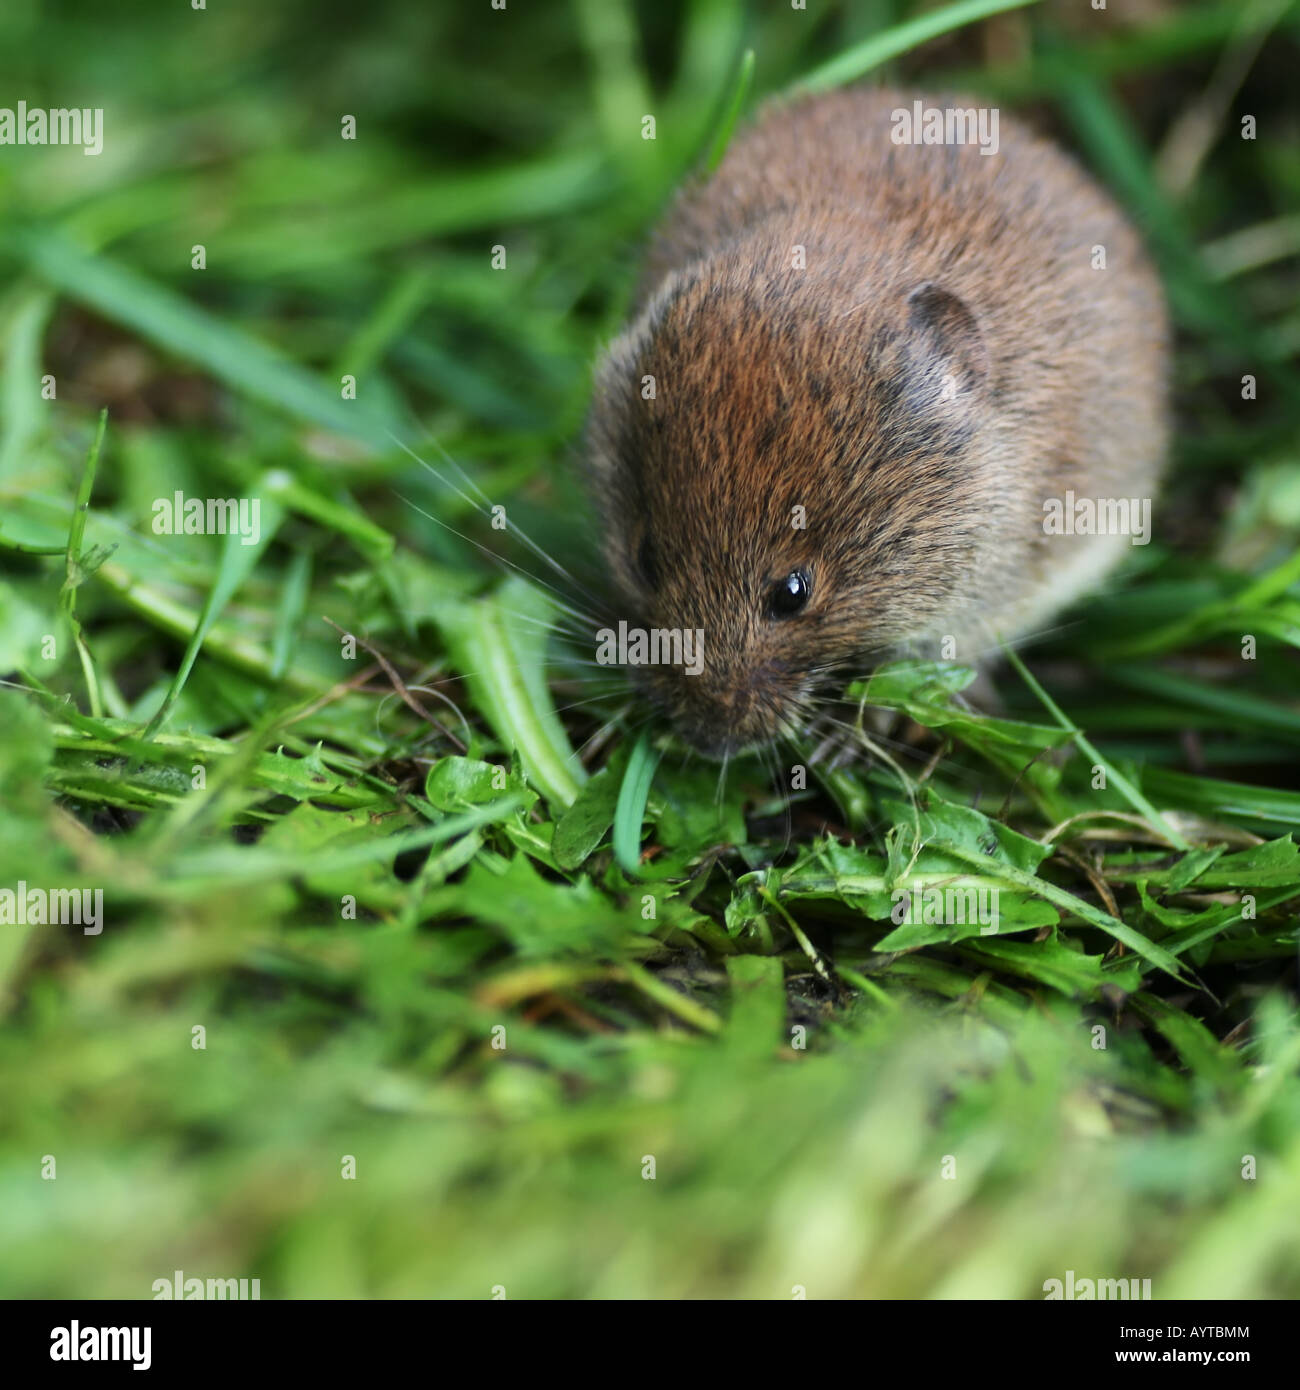 British bank vole on cut grass lawn Stock Photo